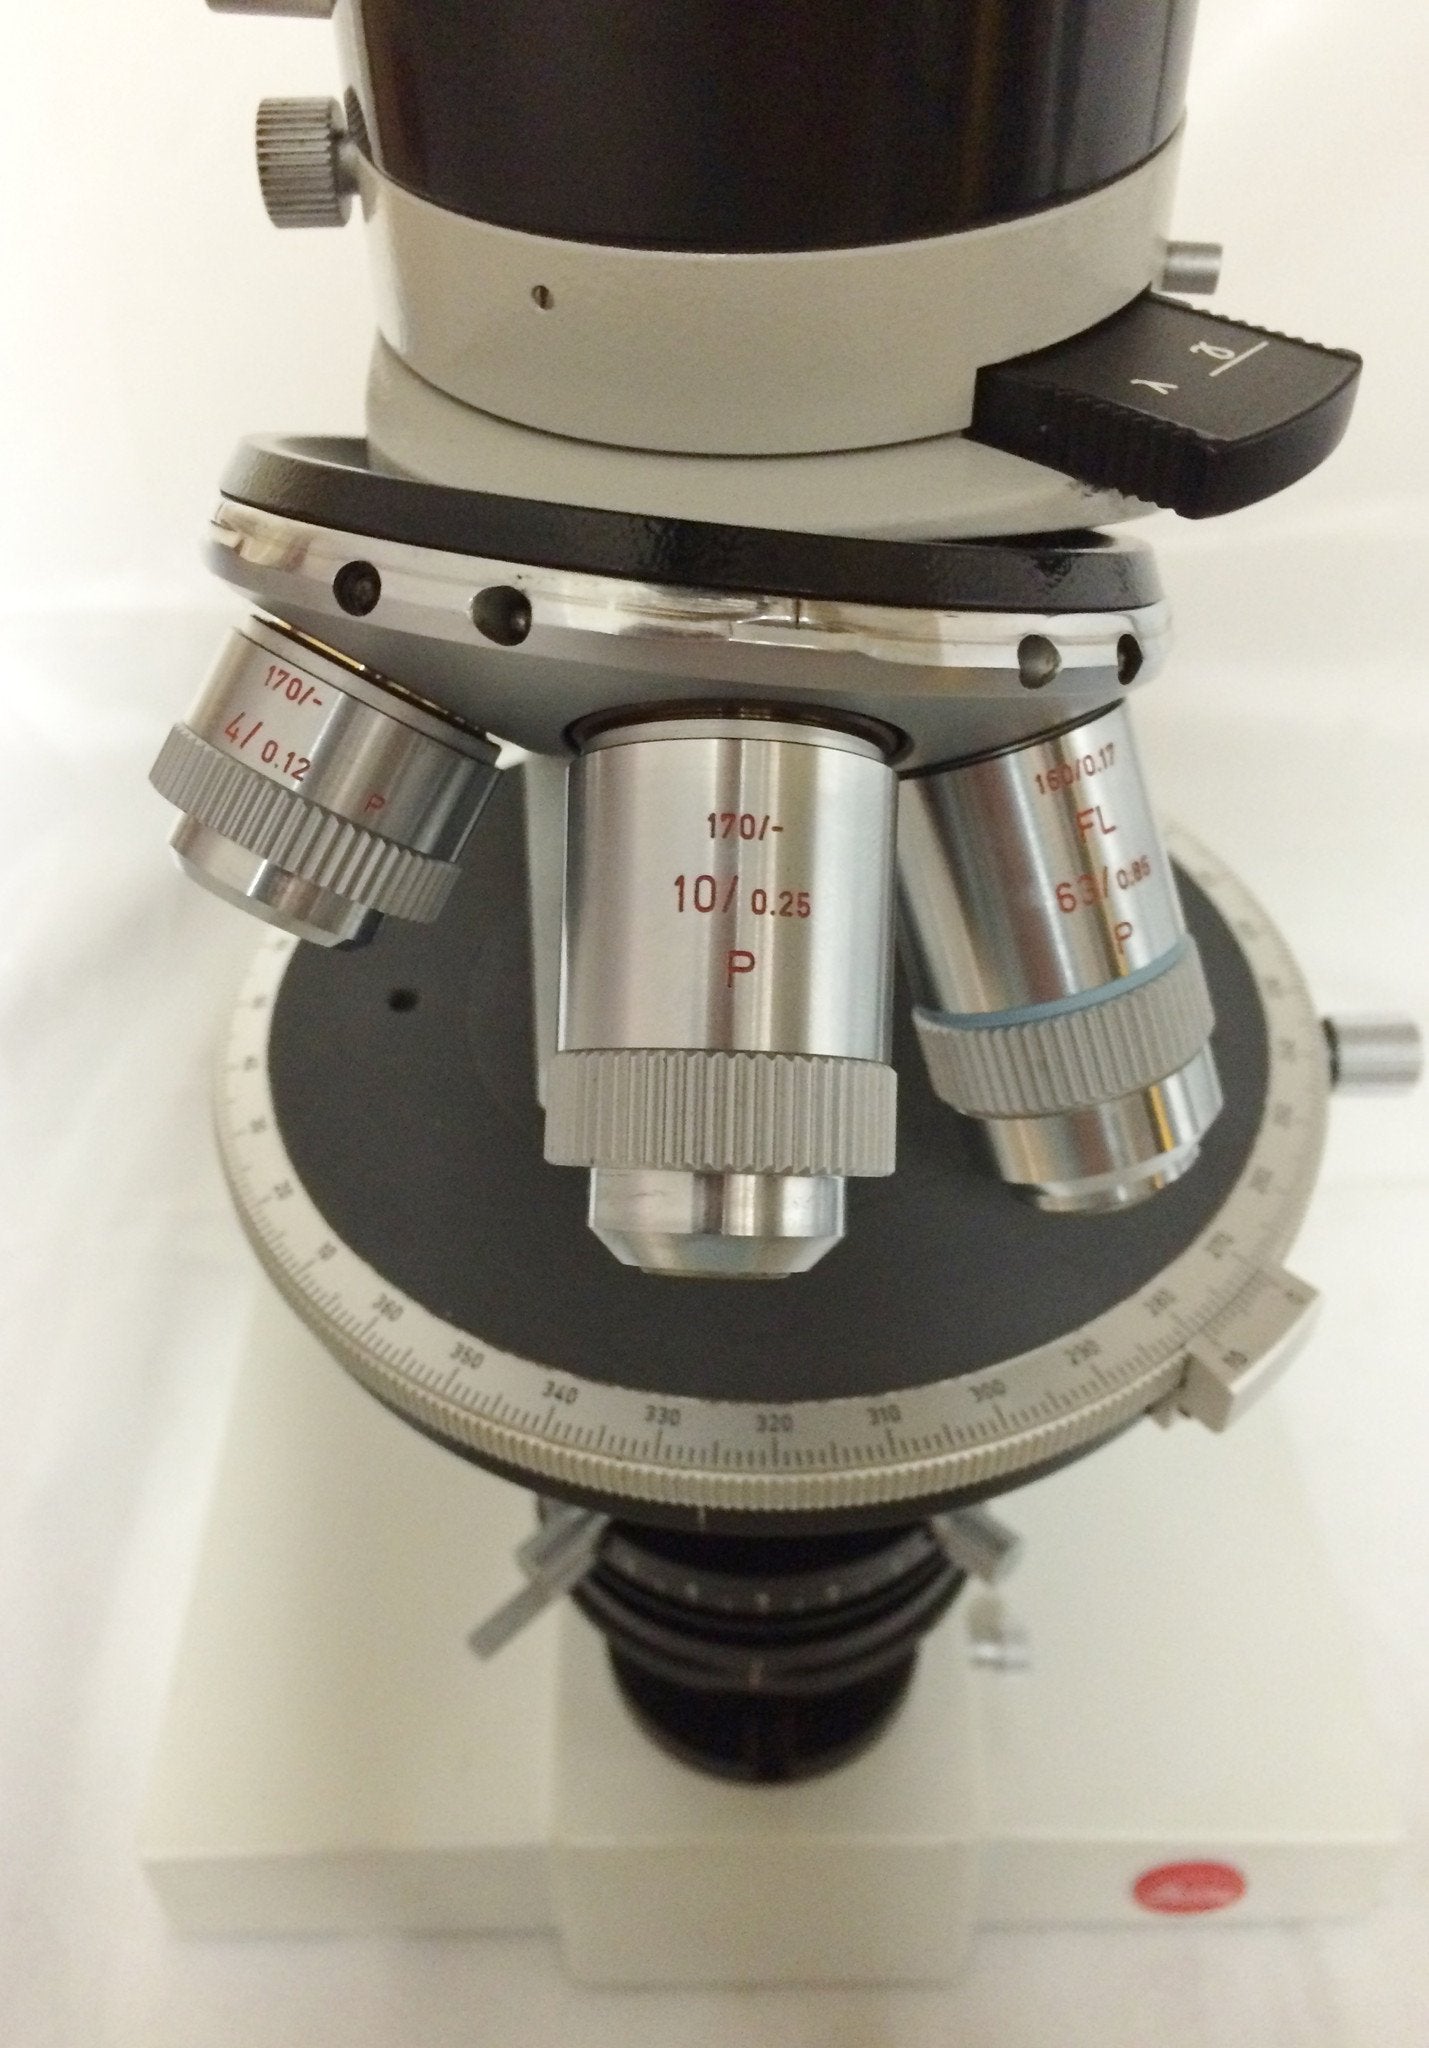 Leitz SM-LUX-POL Polarizing Microscope Refurbished - Microscope Central
 - 5